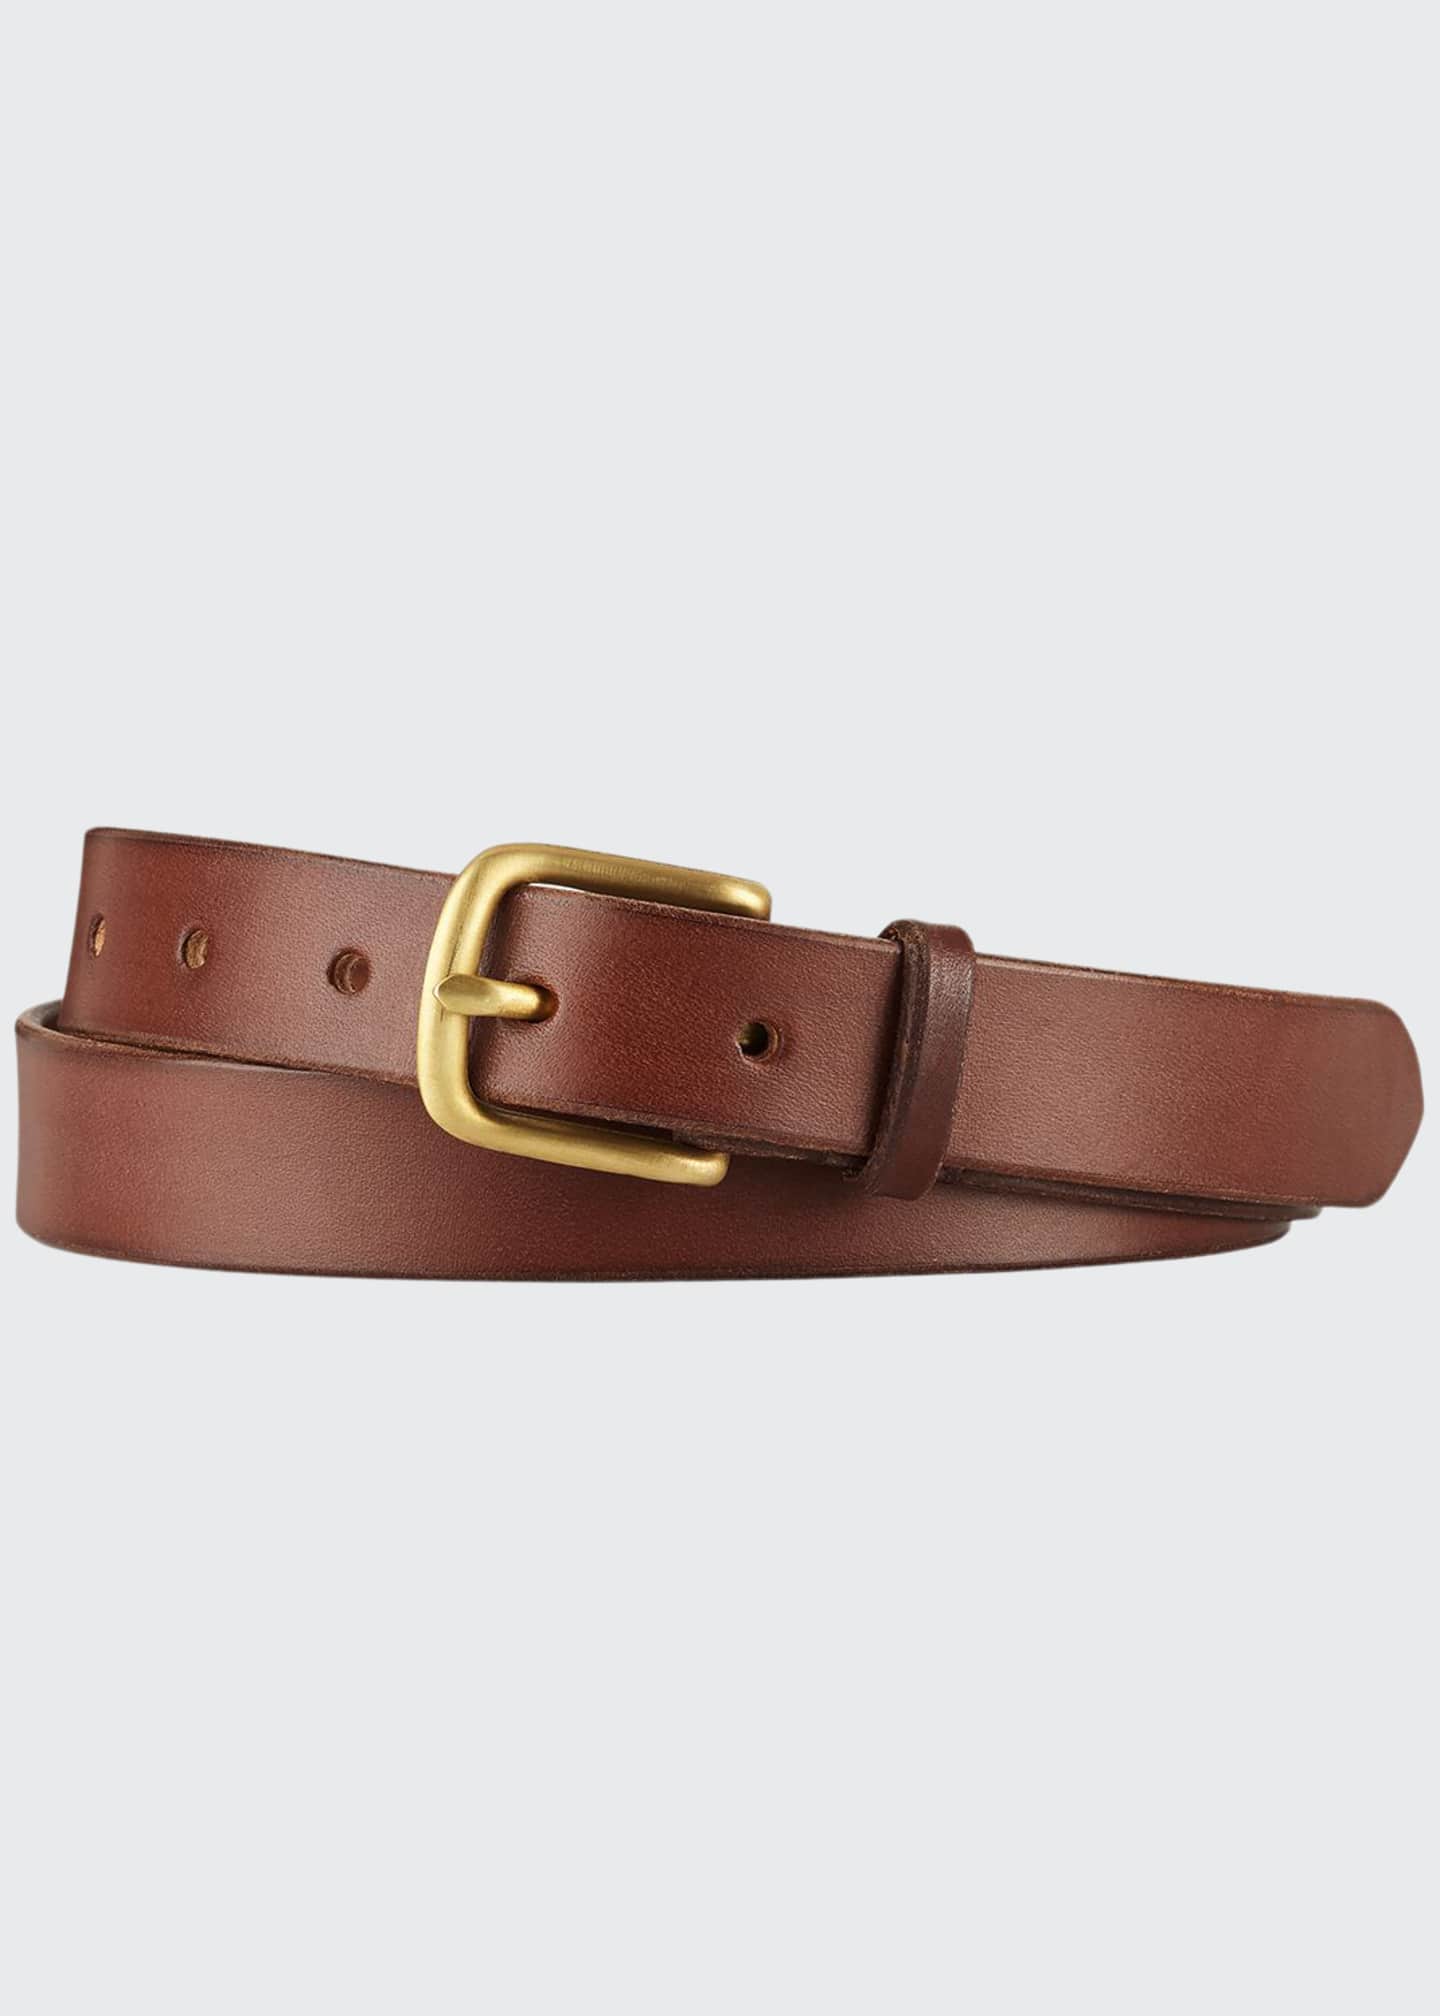 Men’s Belts at Bergdorf Goodman